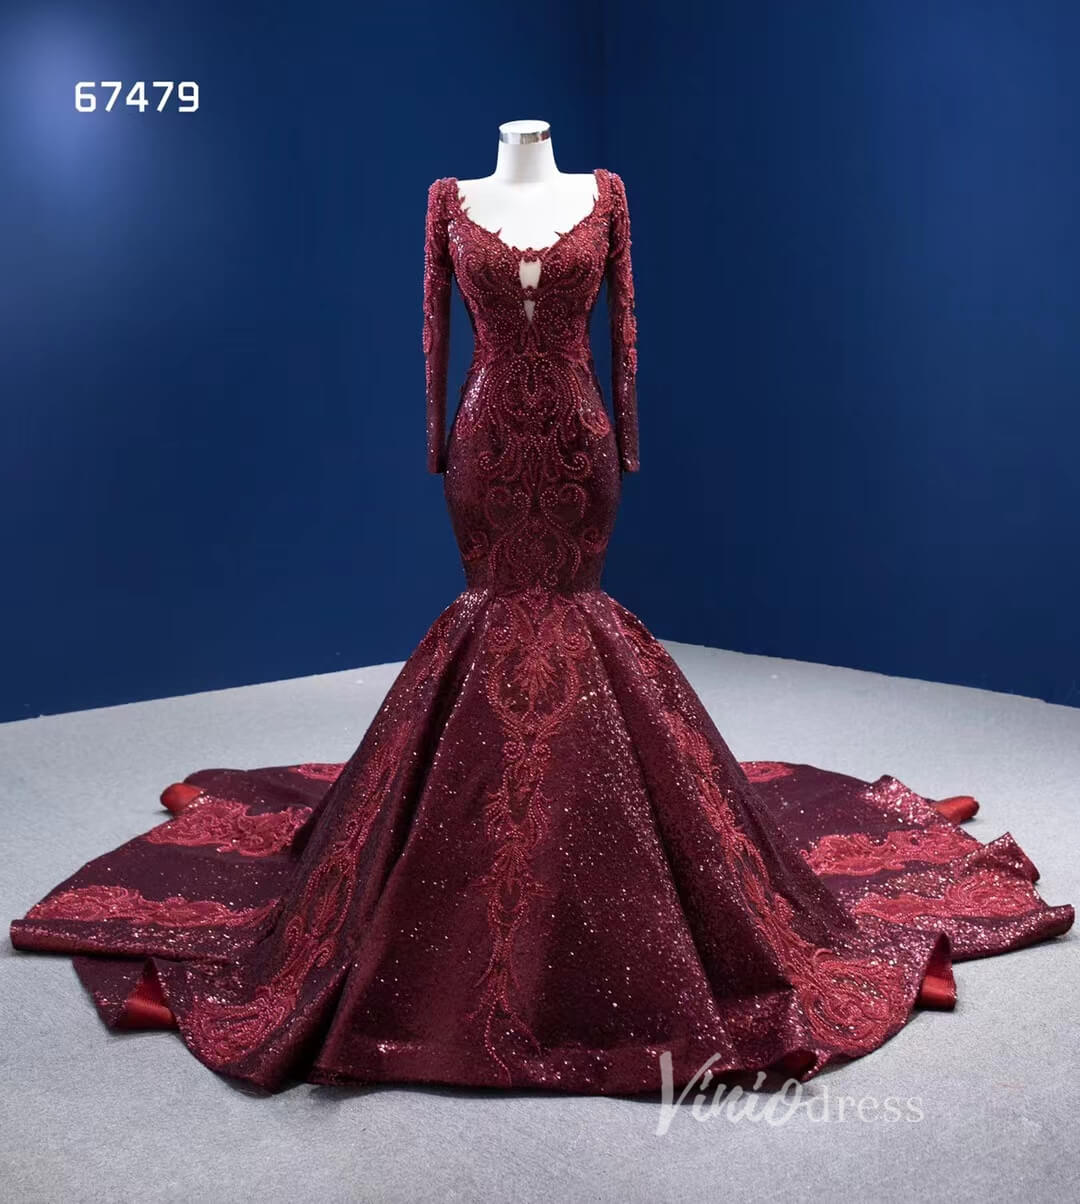 Sparkly Burgundy Mermaid Wedding Dresses with Long Sleeves 67479 viniodress-wedding dresses-Viniodress-Viniodress